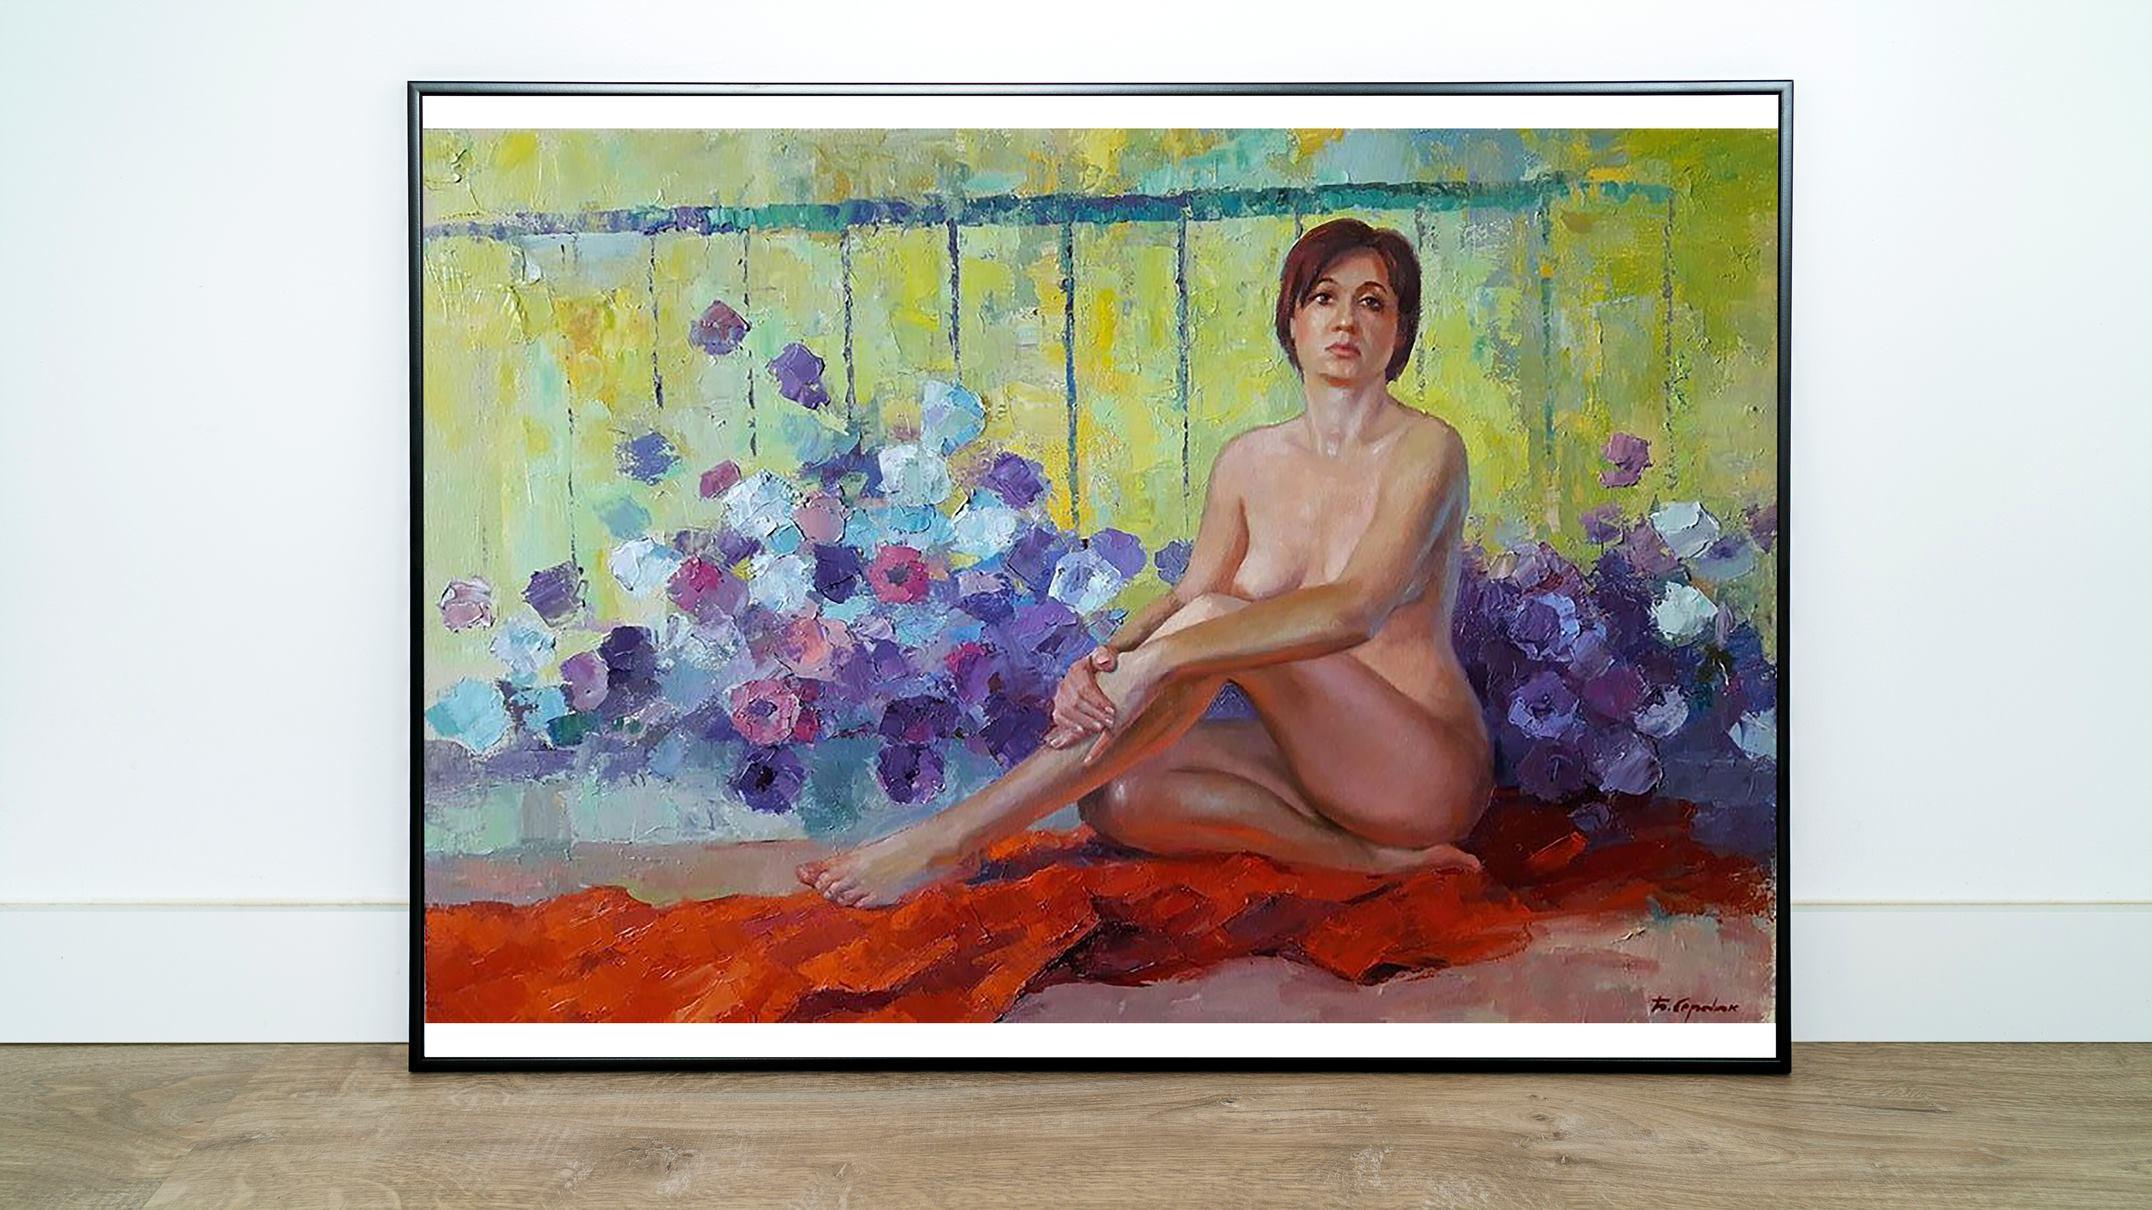 Artist: Boris Serdyuk 
Work: Original oil painting, handmade artwork, one of a kind 
Medium: Oil on Canvas
Style: Impressionism
Year: 2020
Title: Woman in petunia
Size: 23.5